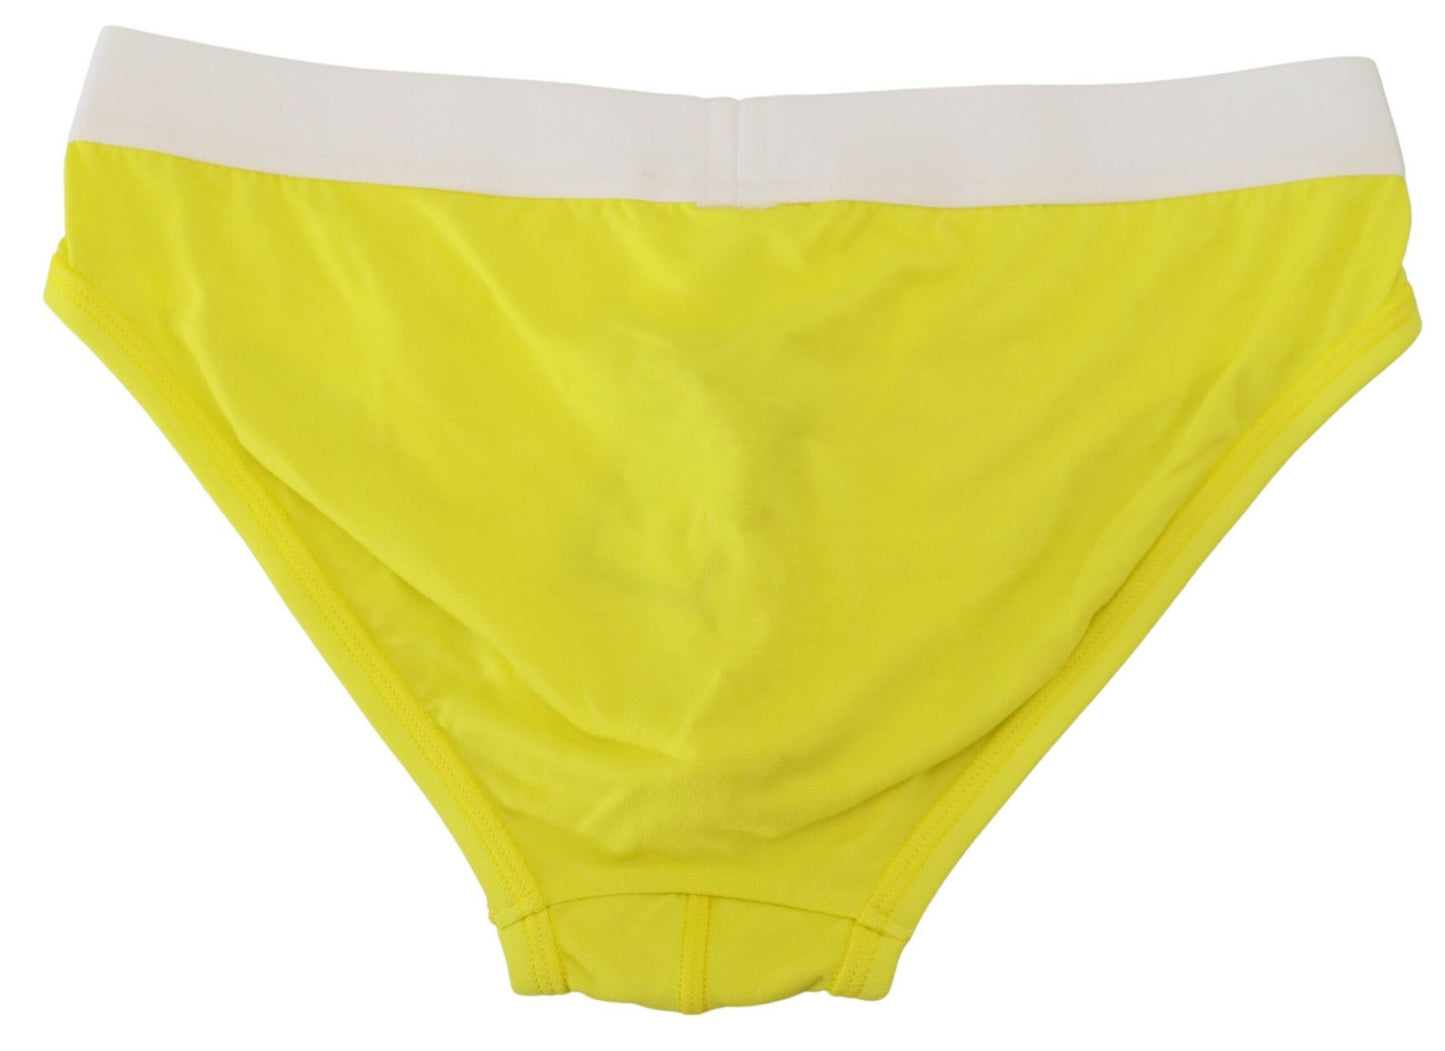 Dsquared ² logo bianco giallo maschi modali elastici biancheria intima